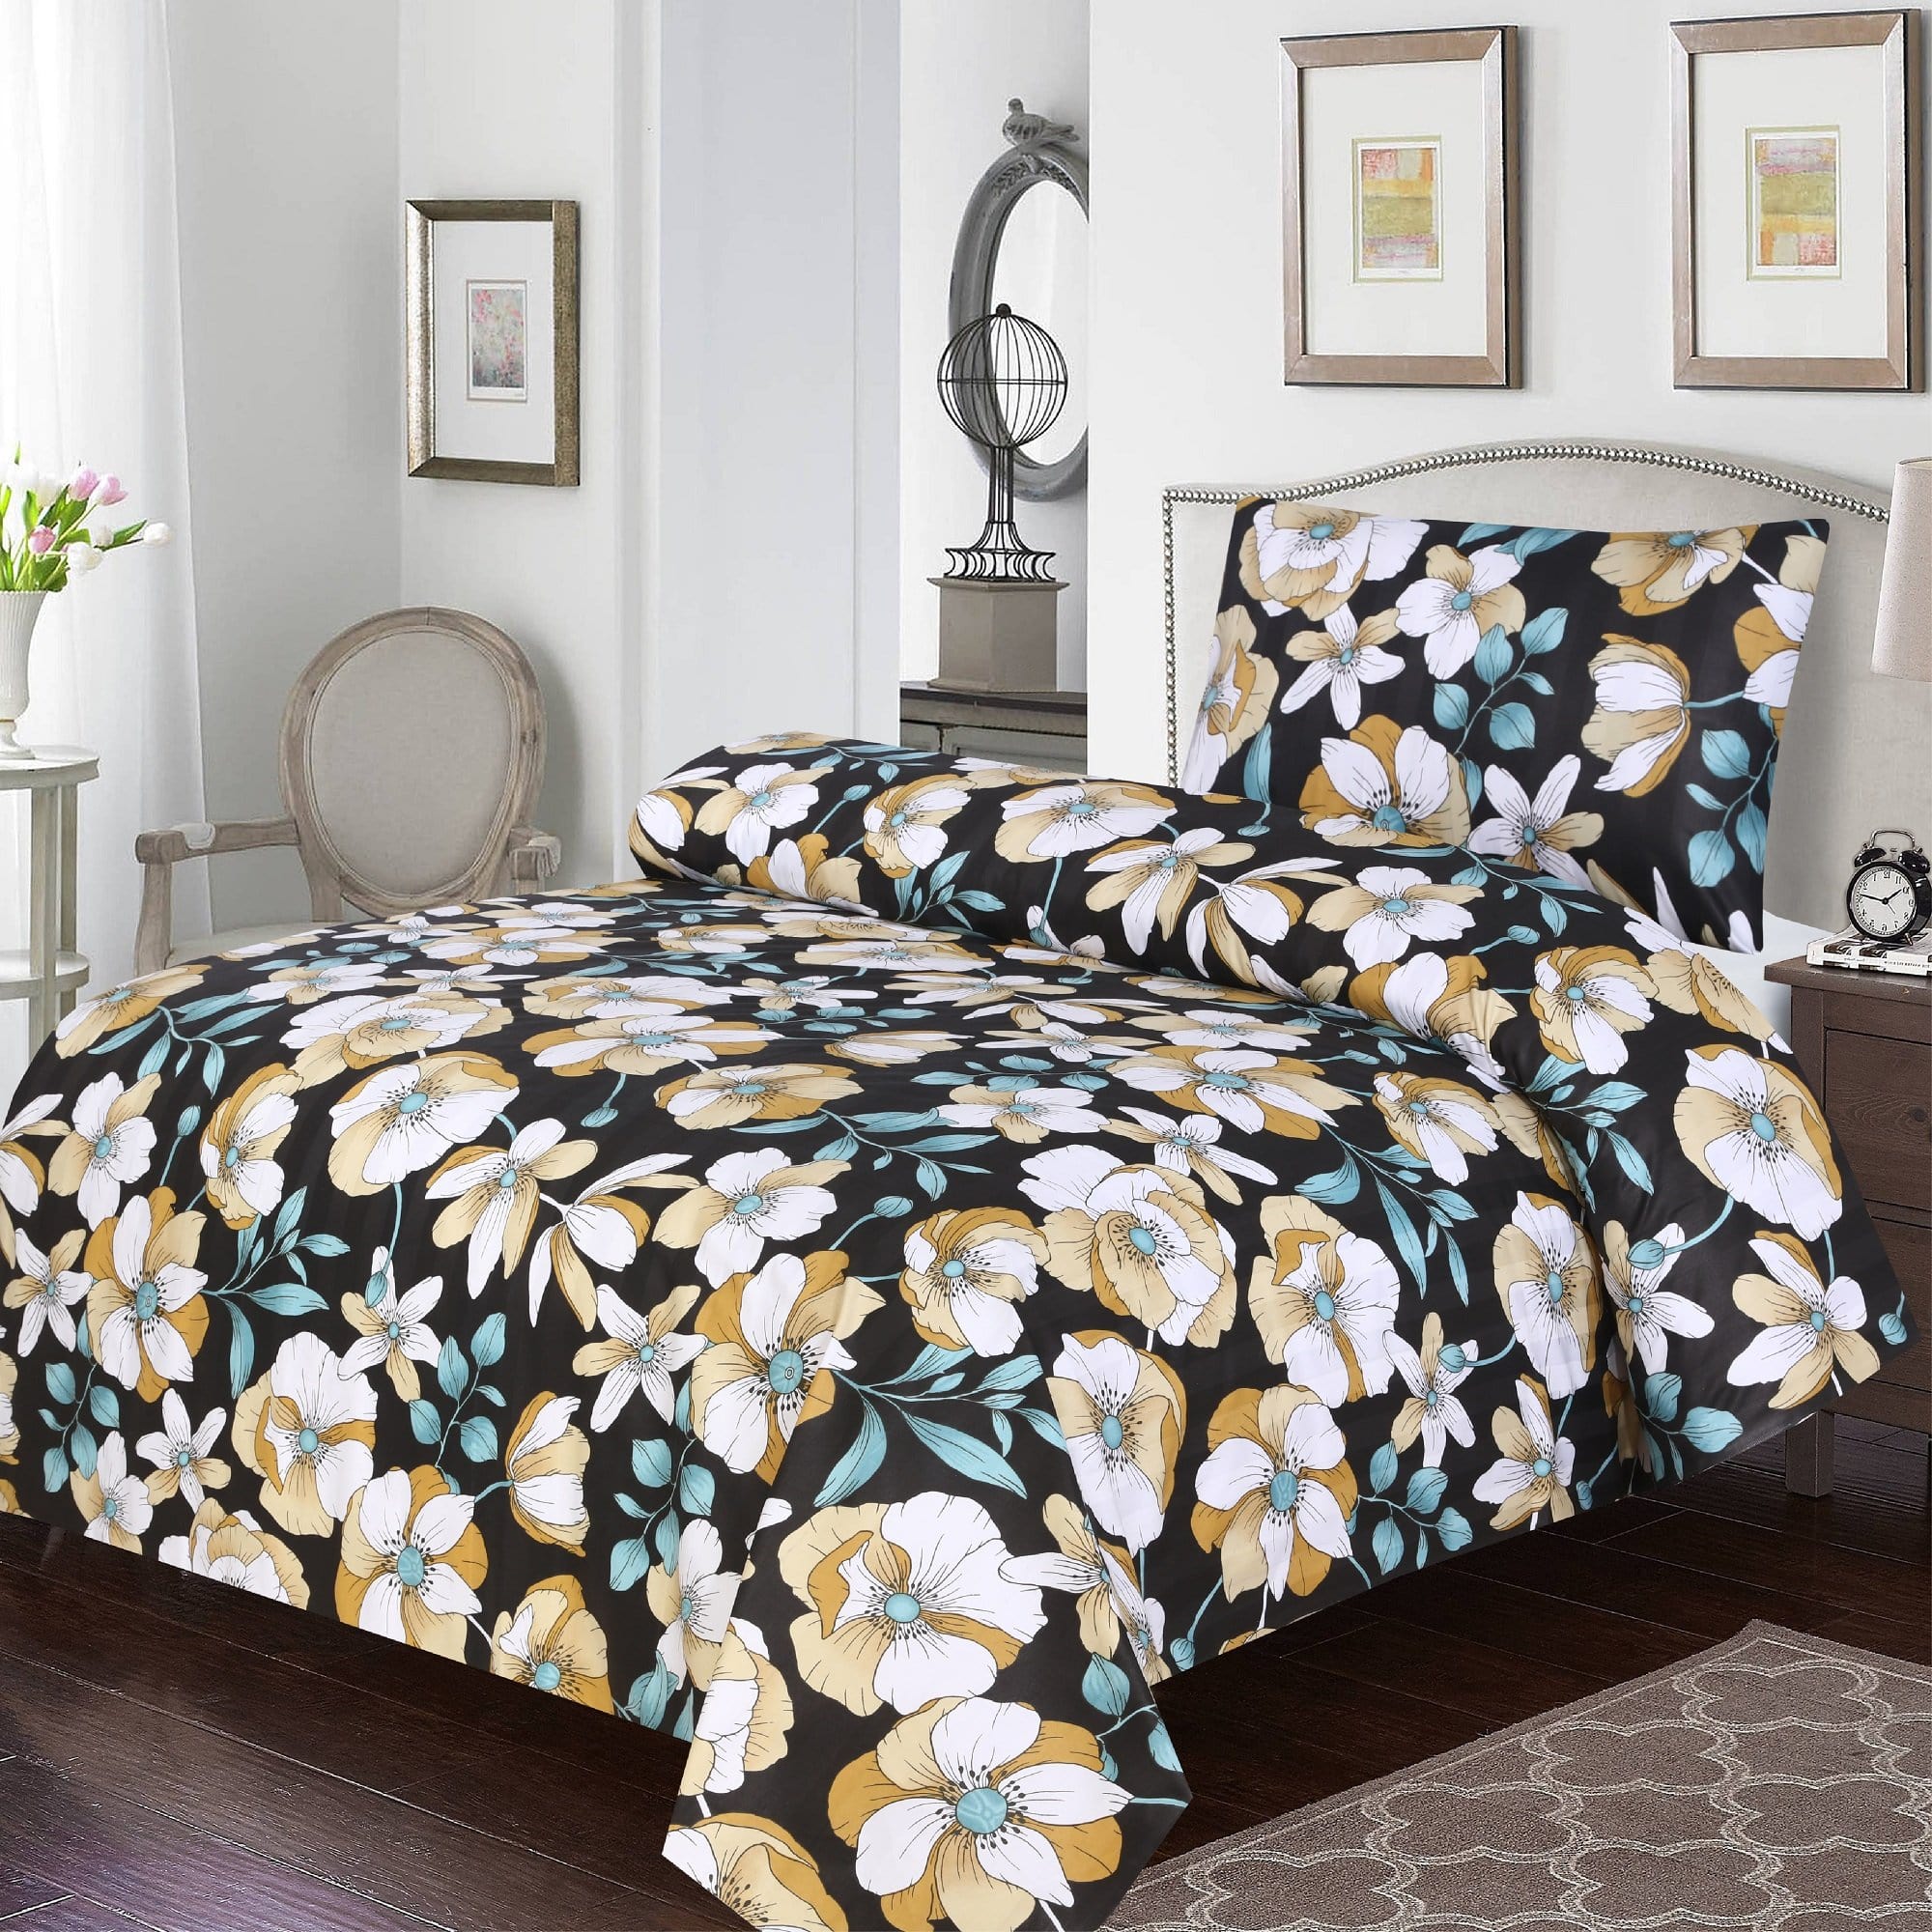 Grace D385-Reactive cotton Satin Quality single size Bedsheet with 1 pillow cover.